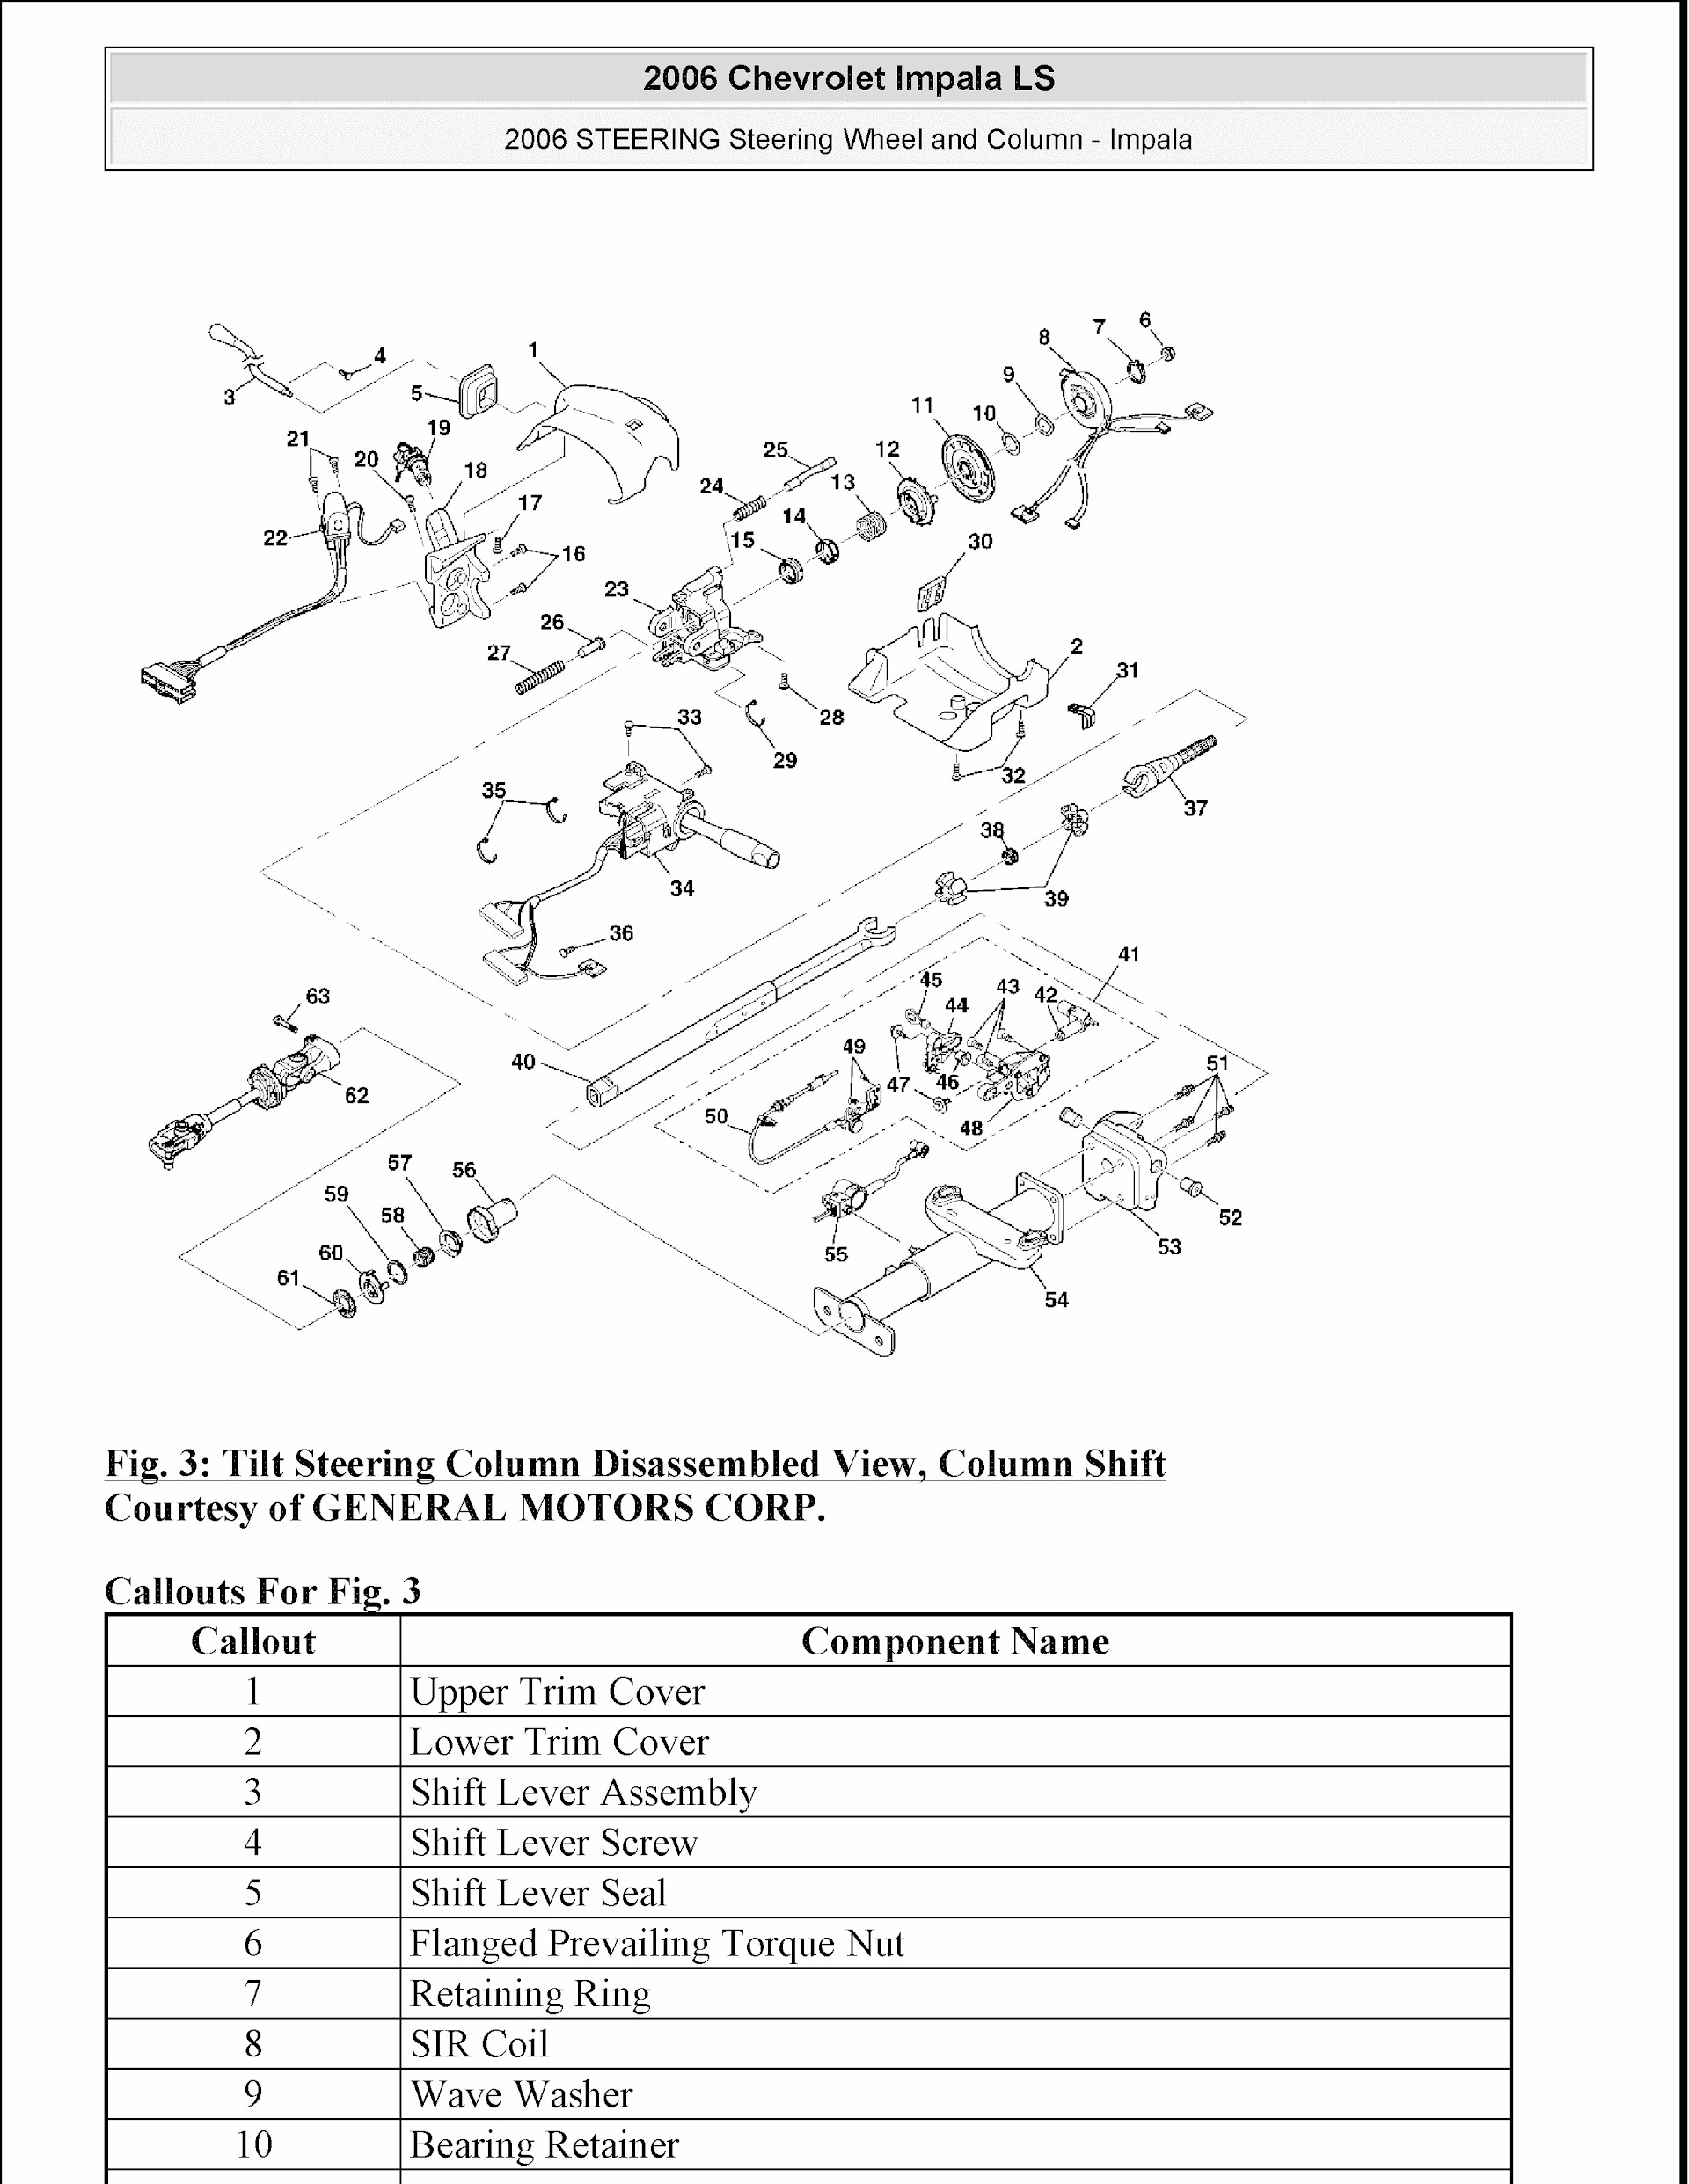 2006-2010 Chevrolet Impala Repair Manual, Steering Wheel and Column